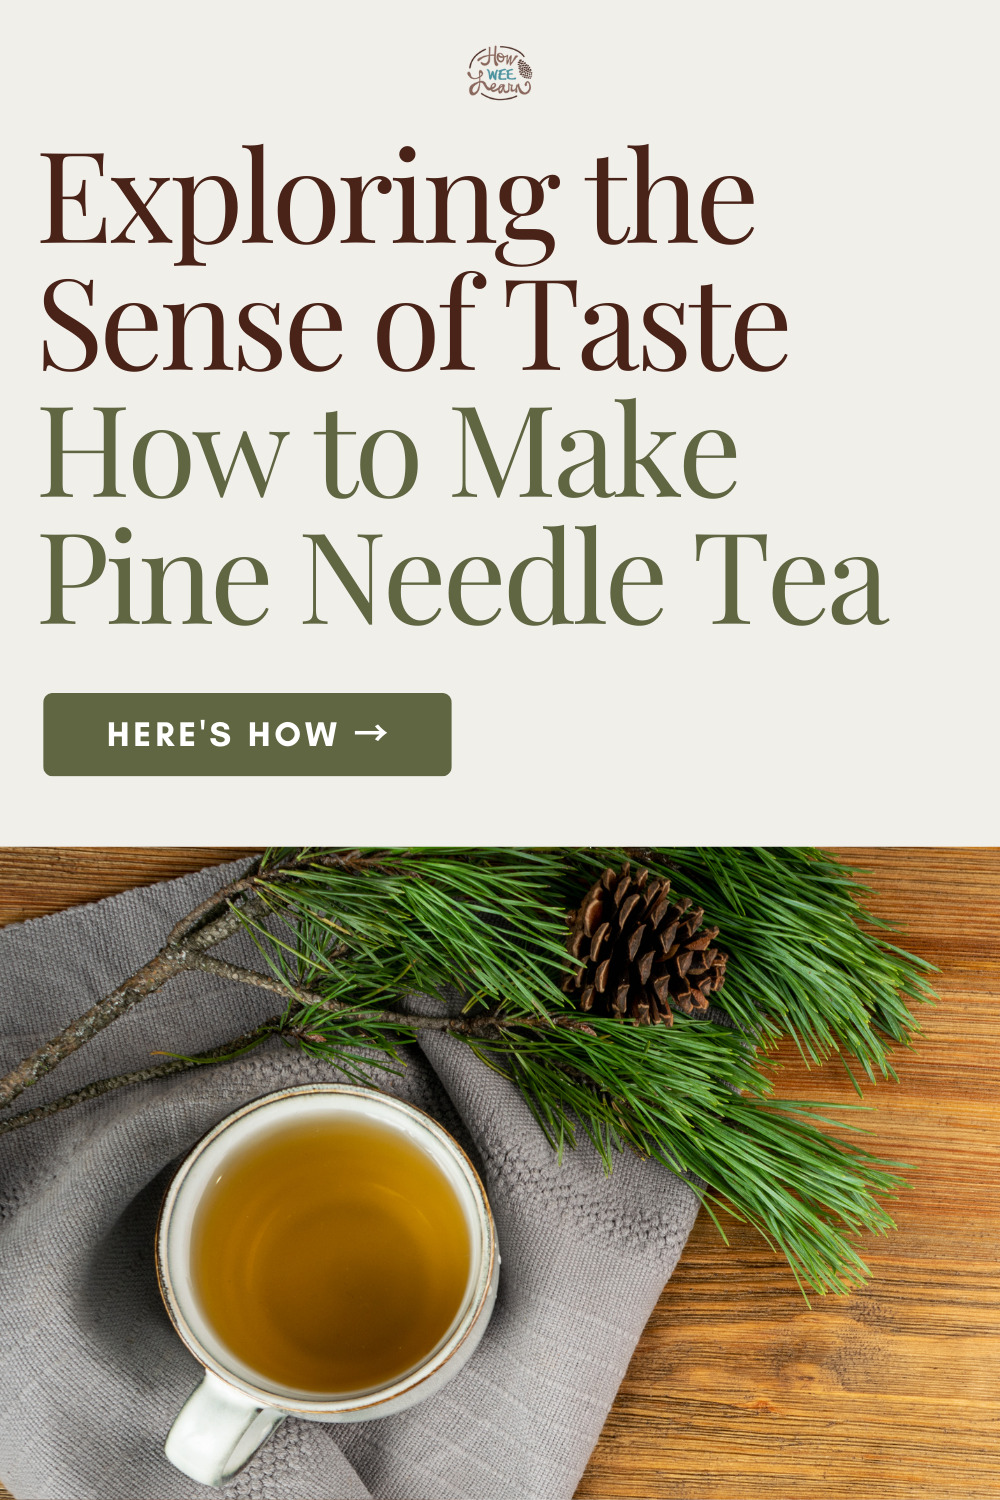 Five Senses Activity: How to Make Pine Needle Tea